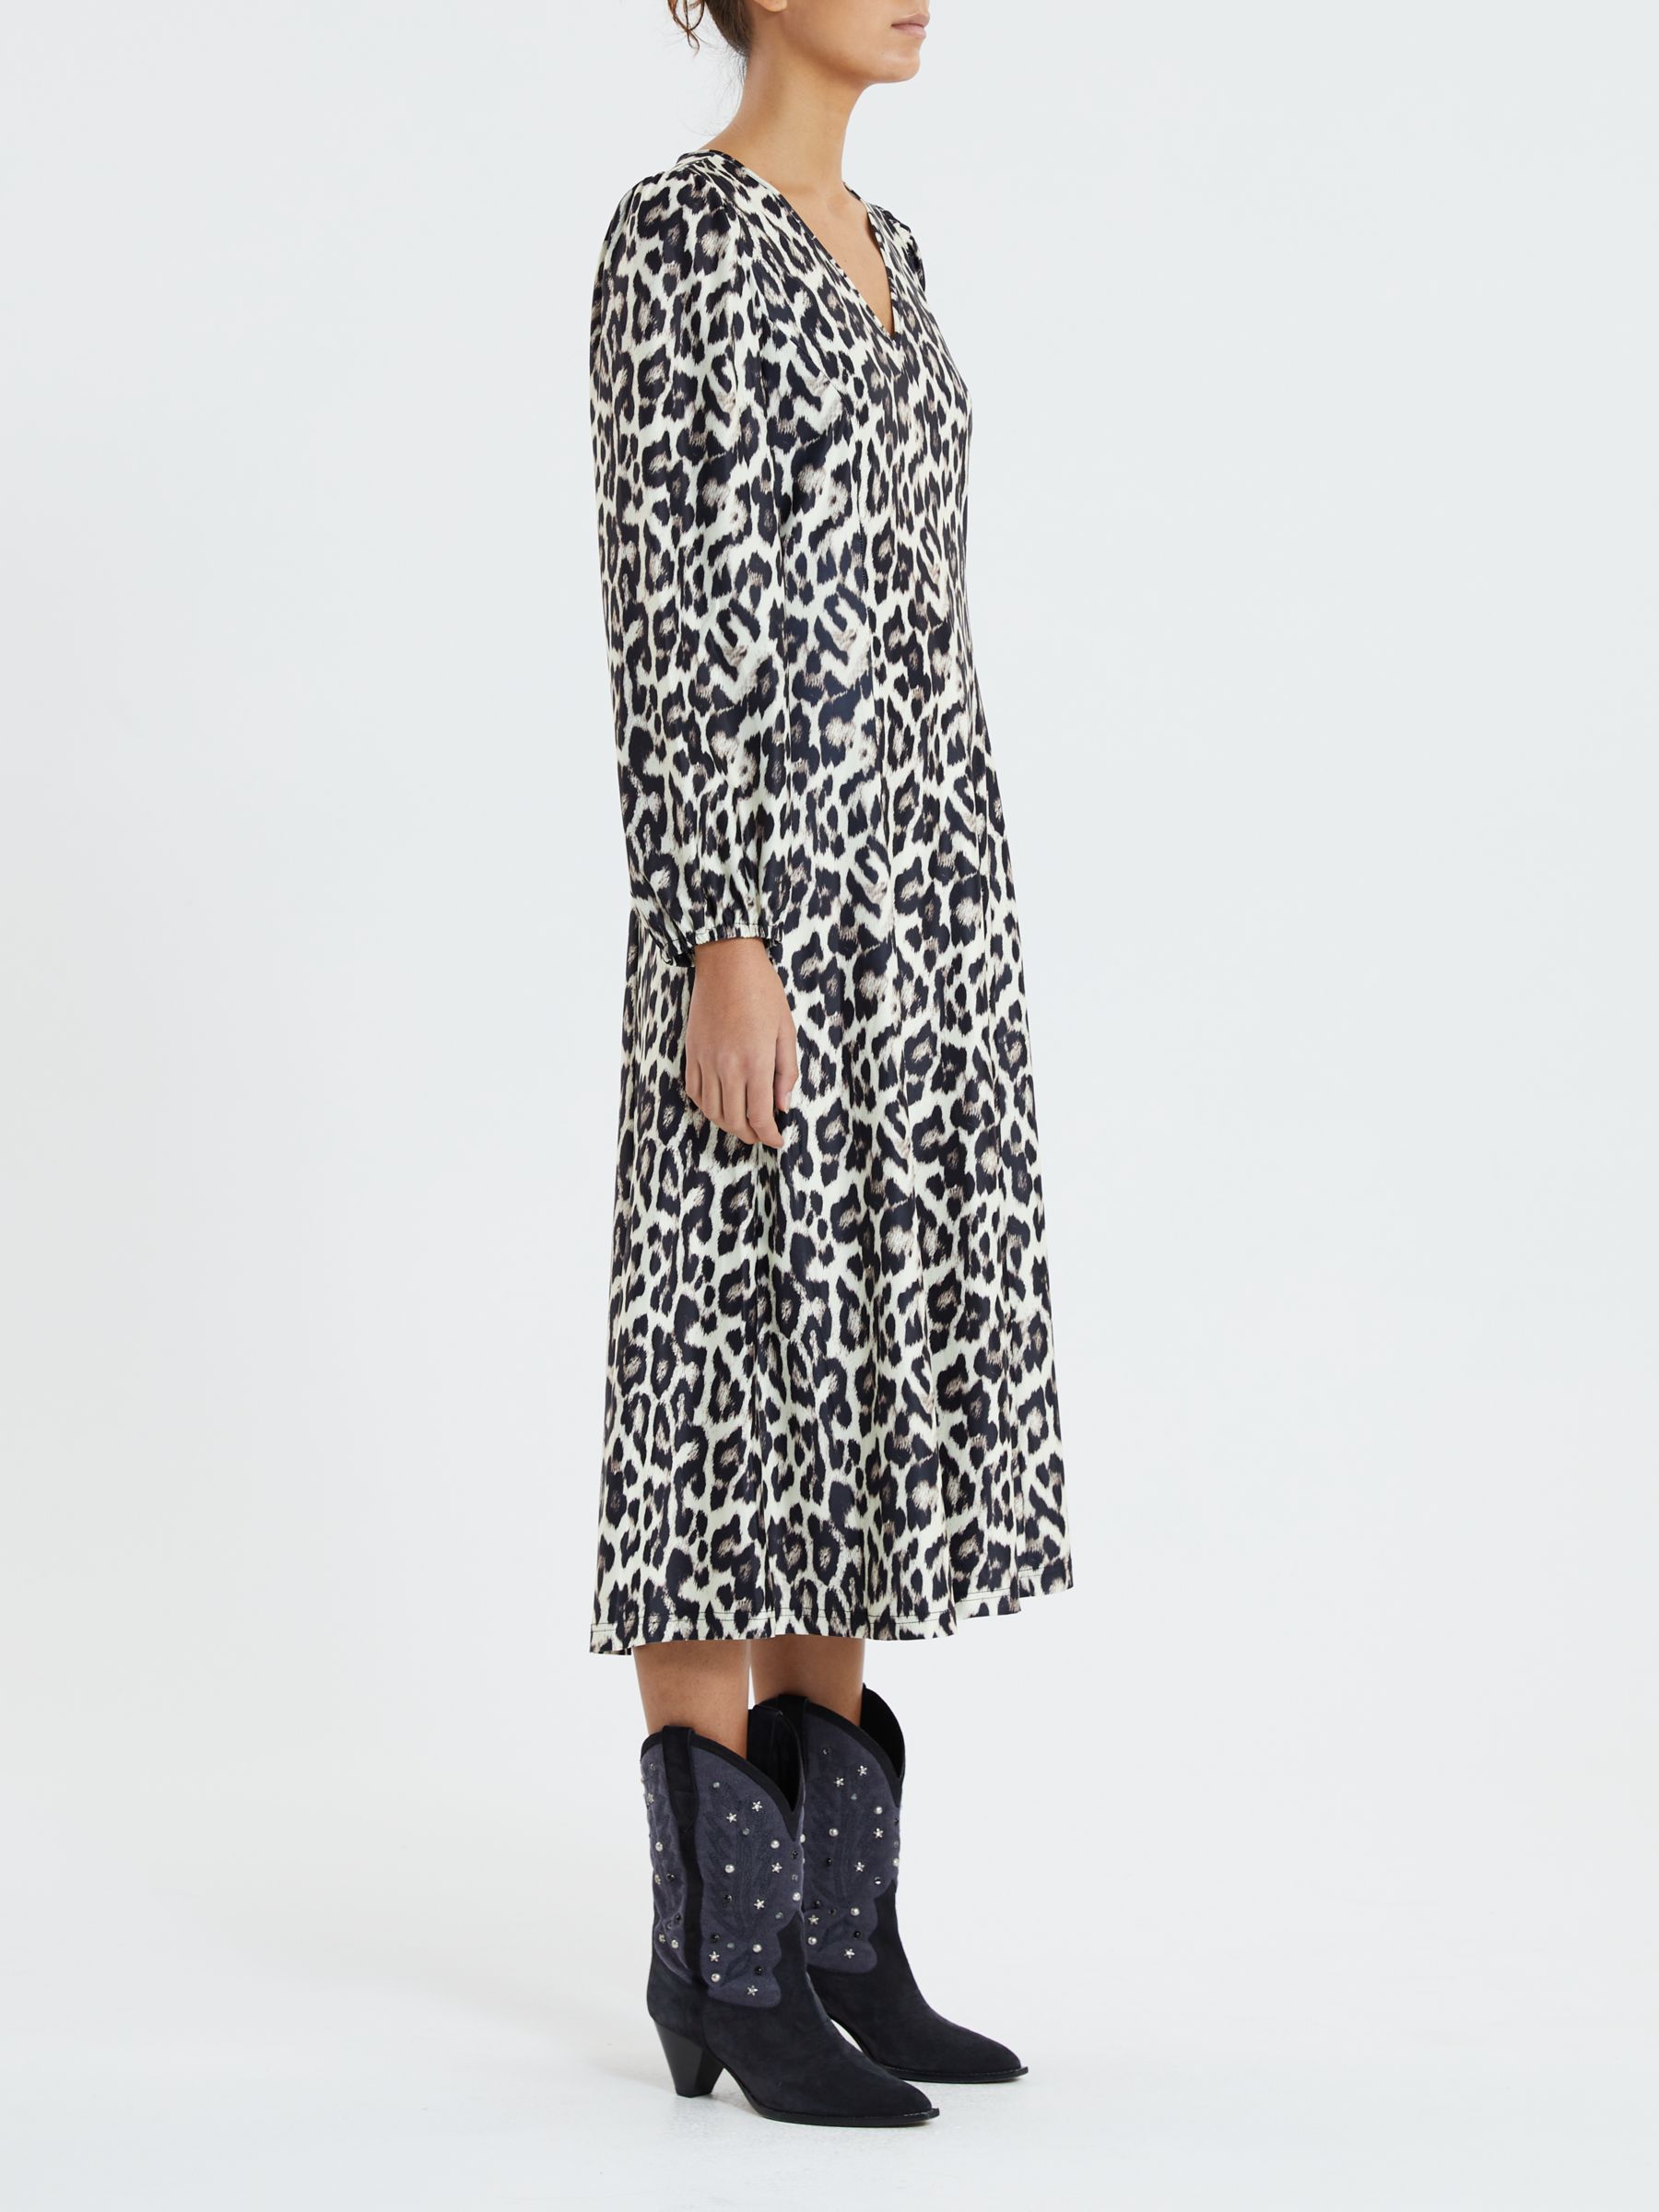 Lollys Laundry Lake Leopard Print Midi Dress, Brown/Multi, XS